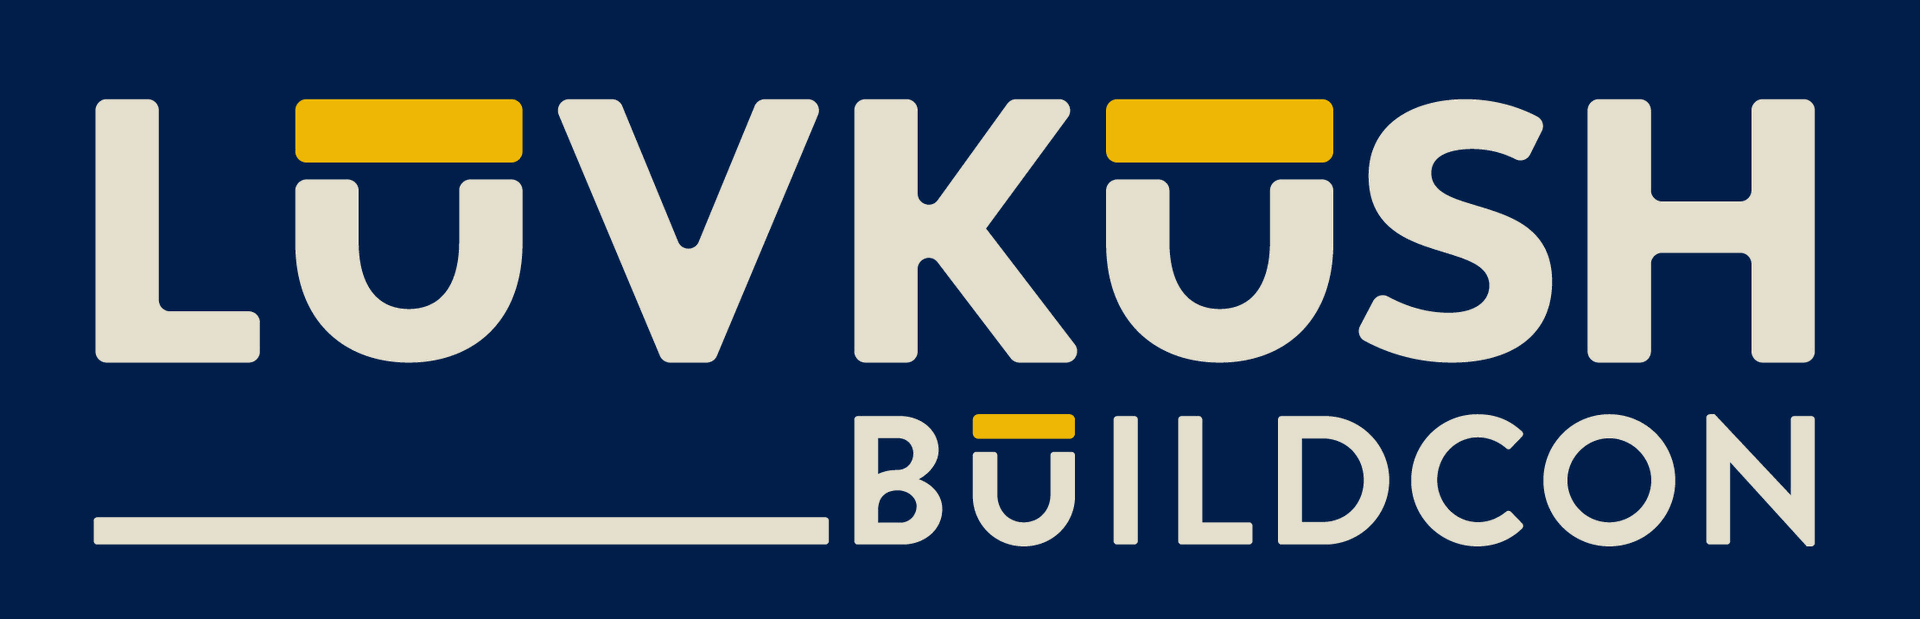 Luvkush Buildcon